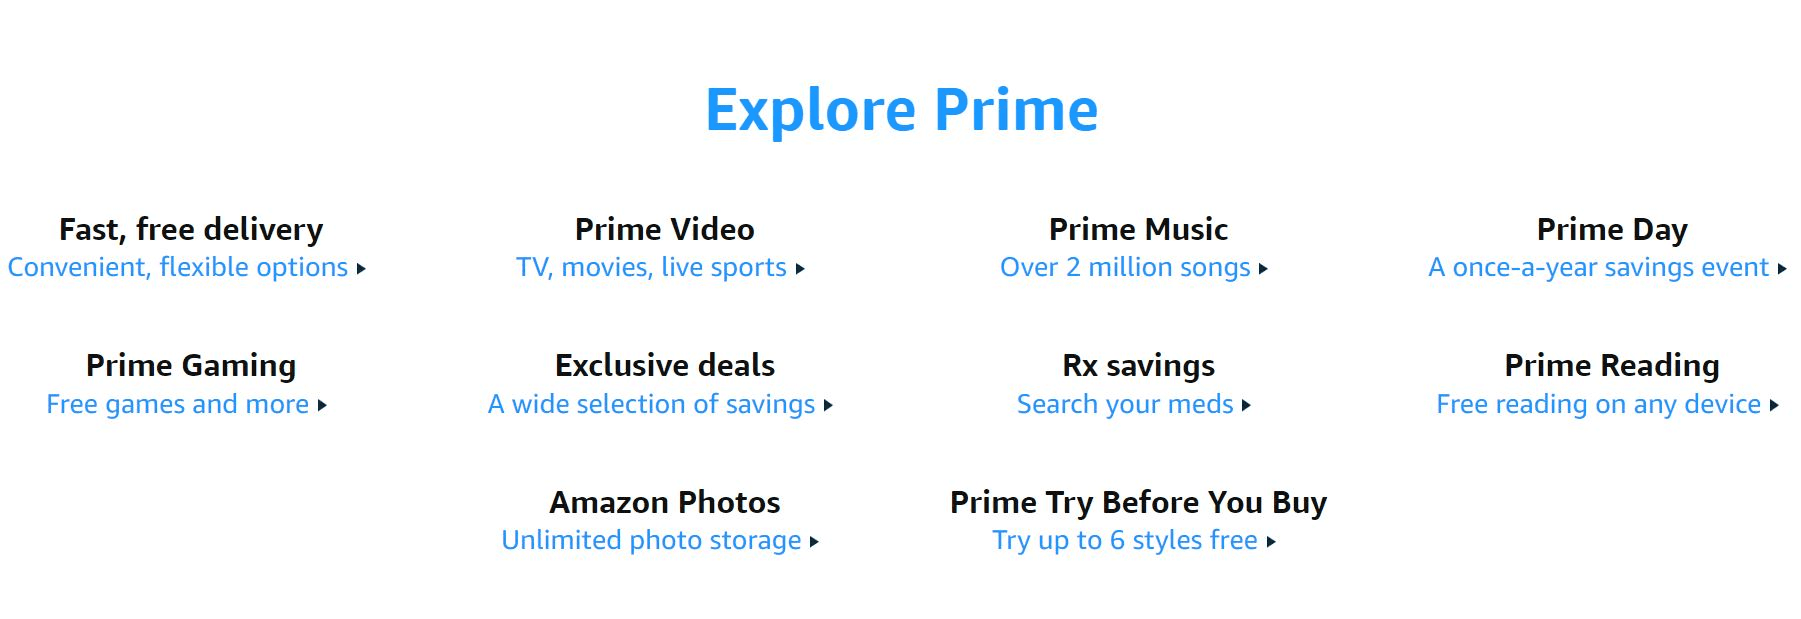 The benefits of an Amazon Prime membership